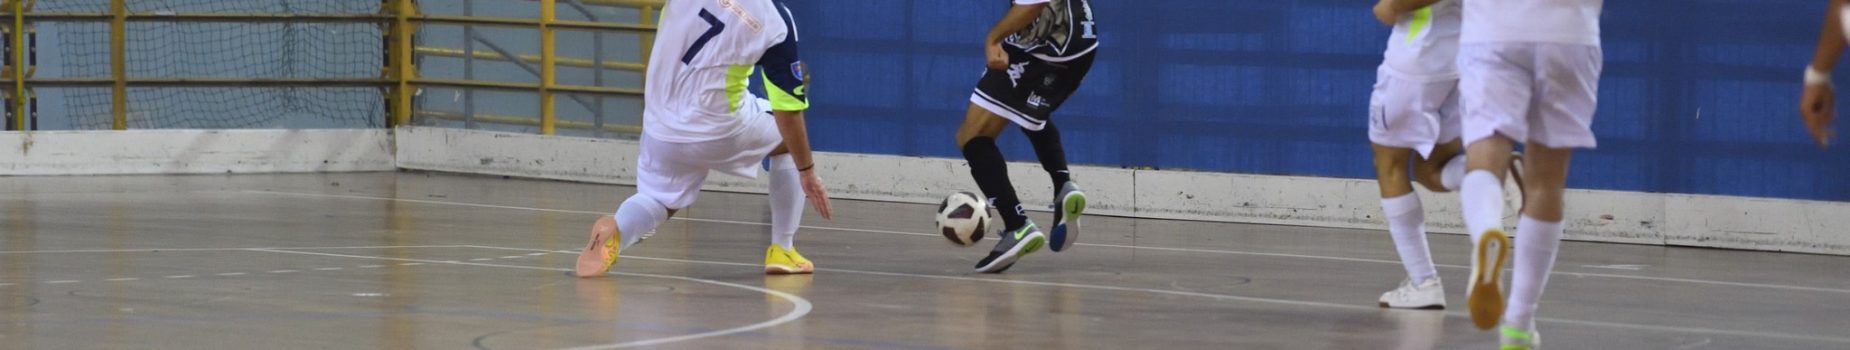 Prepartita Futsal Cesena-Prato